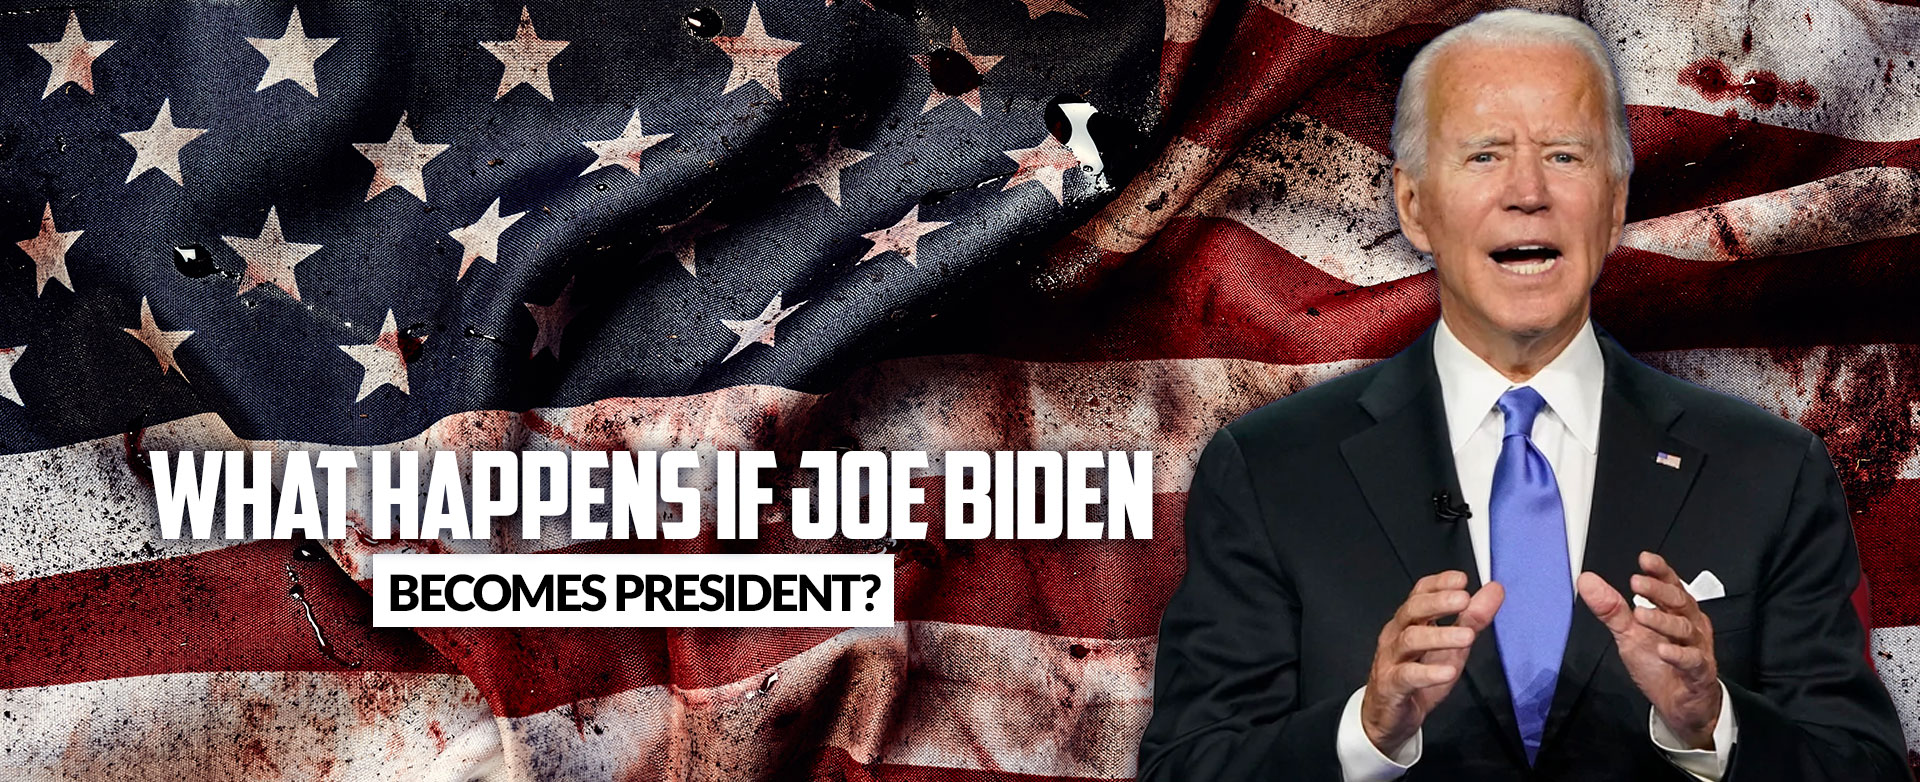 MyPatriotsNetwork-What Happens If Joe Biden Becomes President? – January 19, 2021 Update